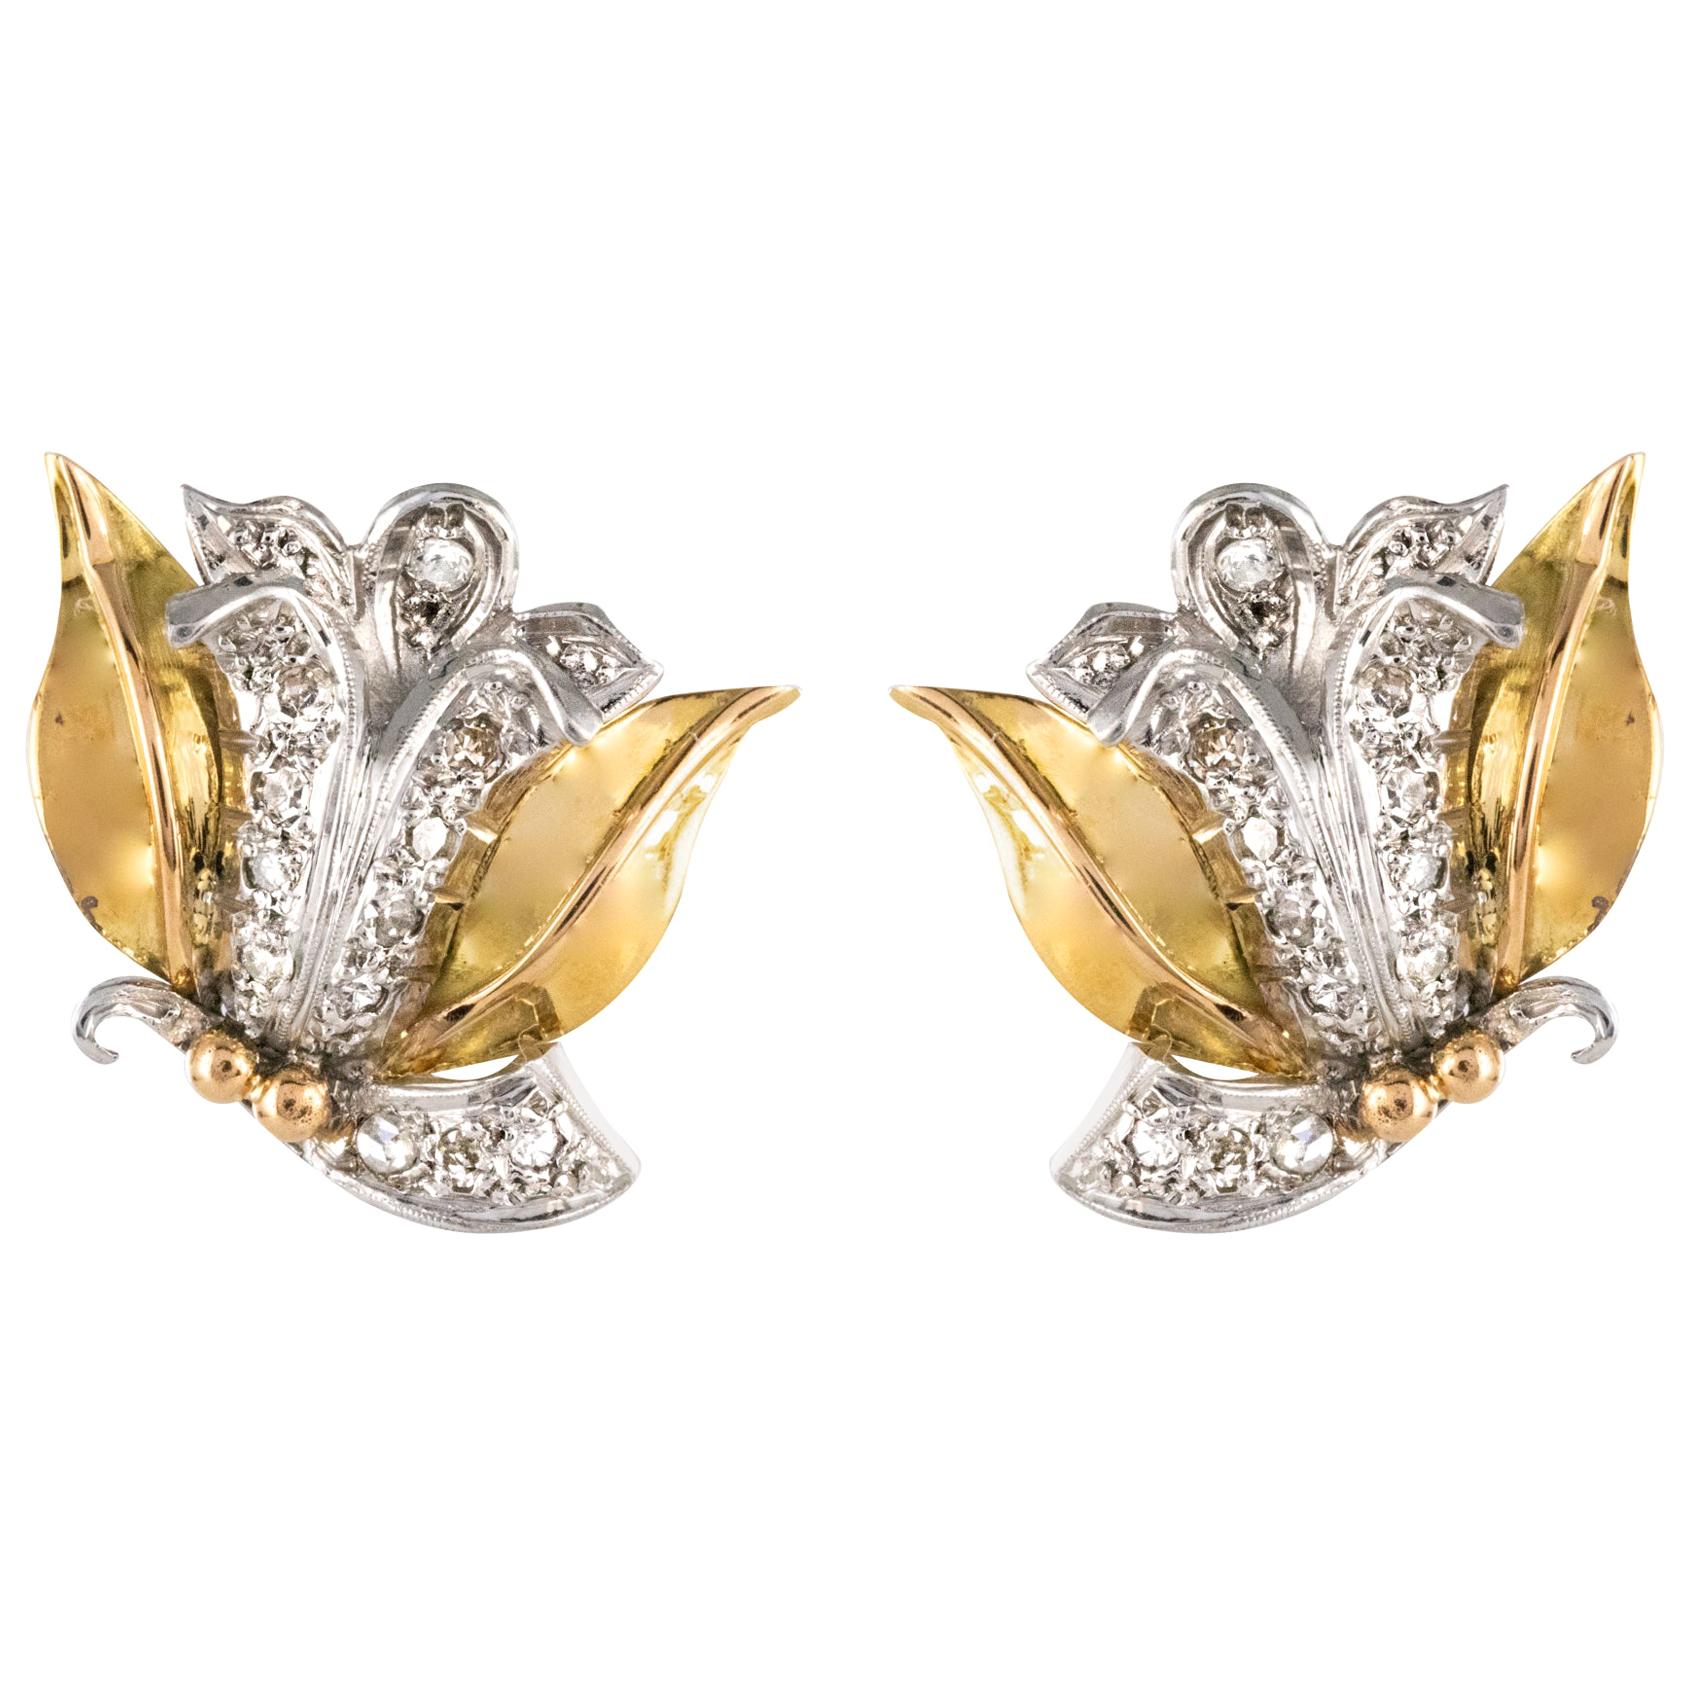 1950s Retro Diamonds 18 Karat Yellow White Gold Flower Shape Earrings